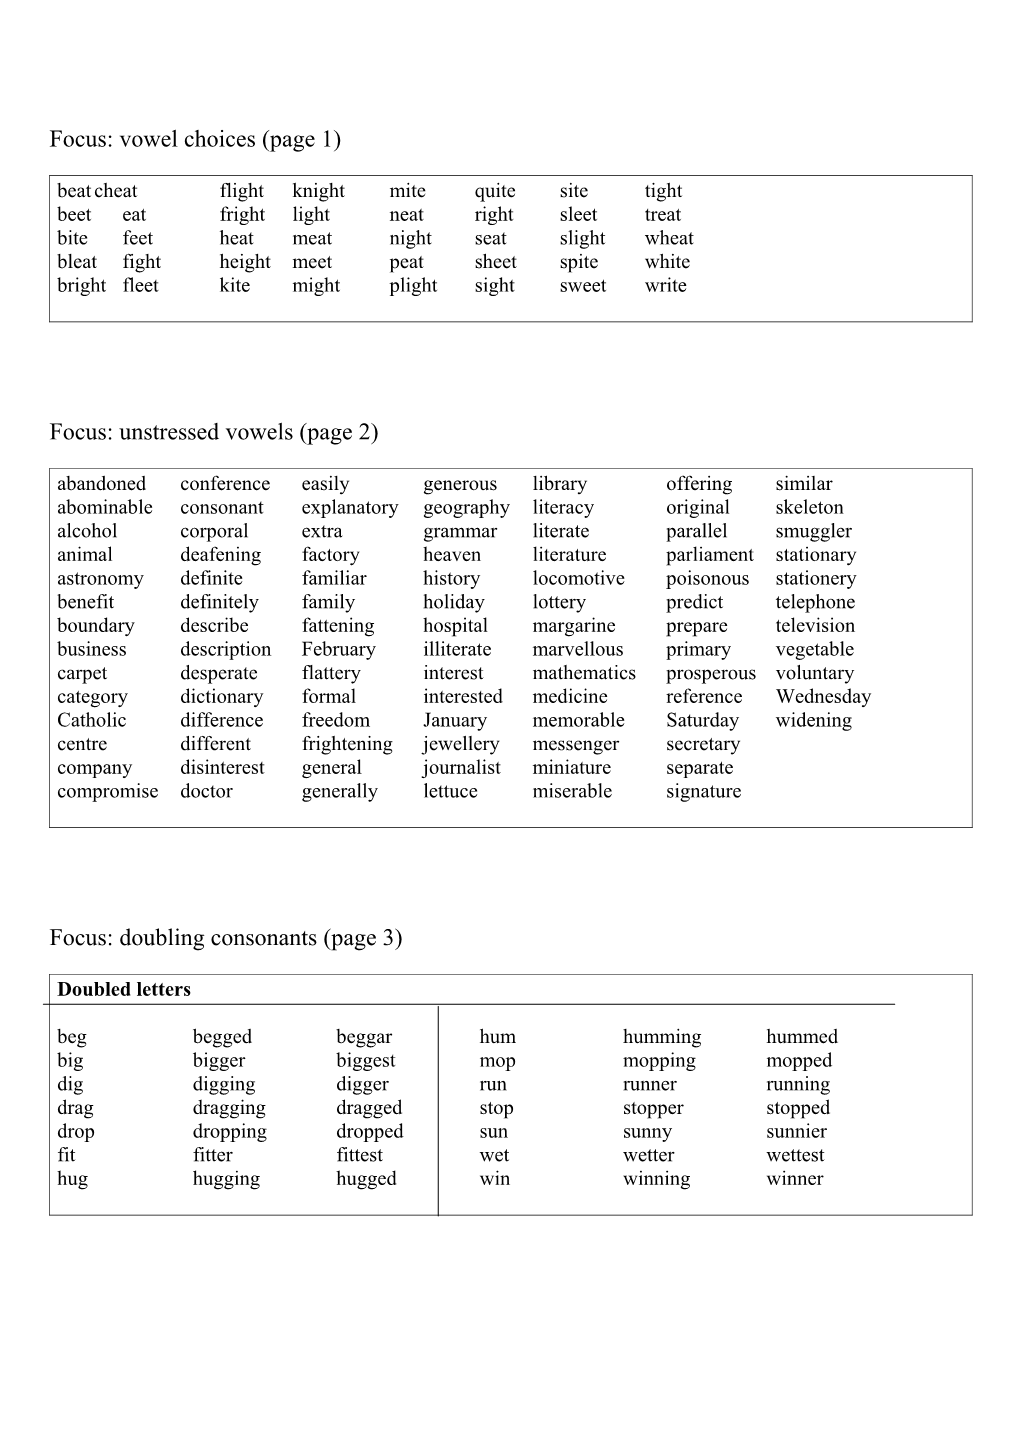 Focus: Vowel Choices (Page 1)